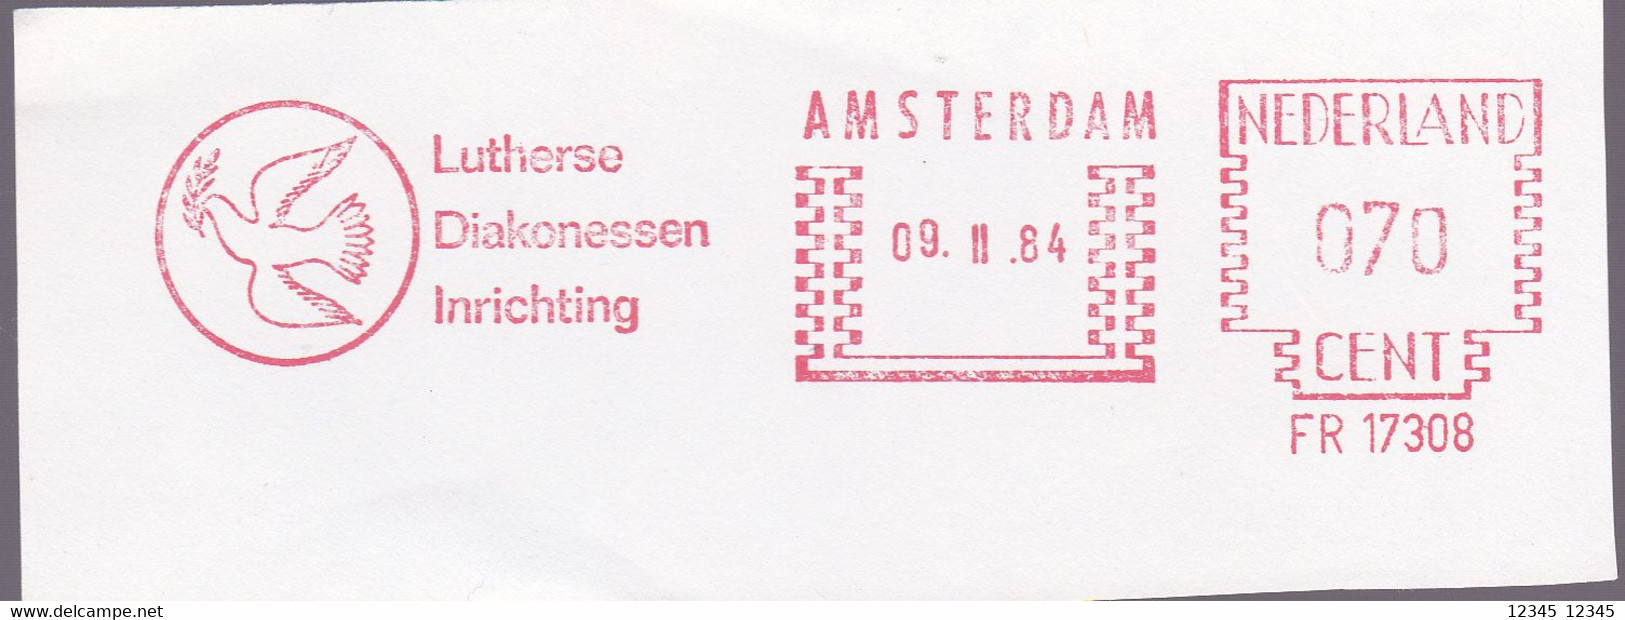 Amsterdam 1984, Lutherse Diakonessen Inrichting, Birds - Macchine Per Obliterare (EMA)